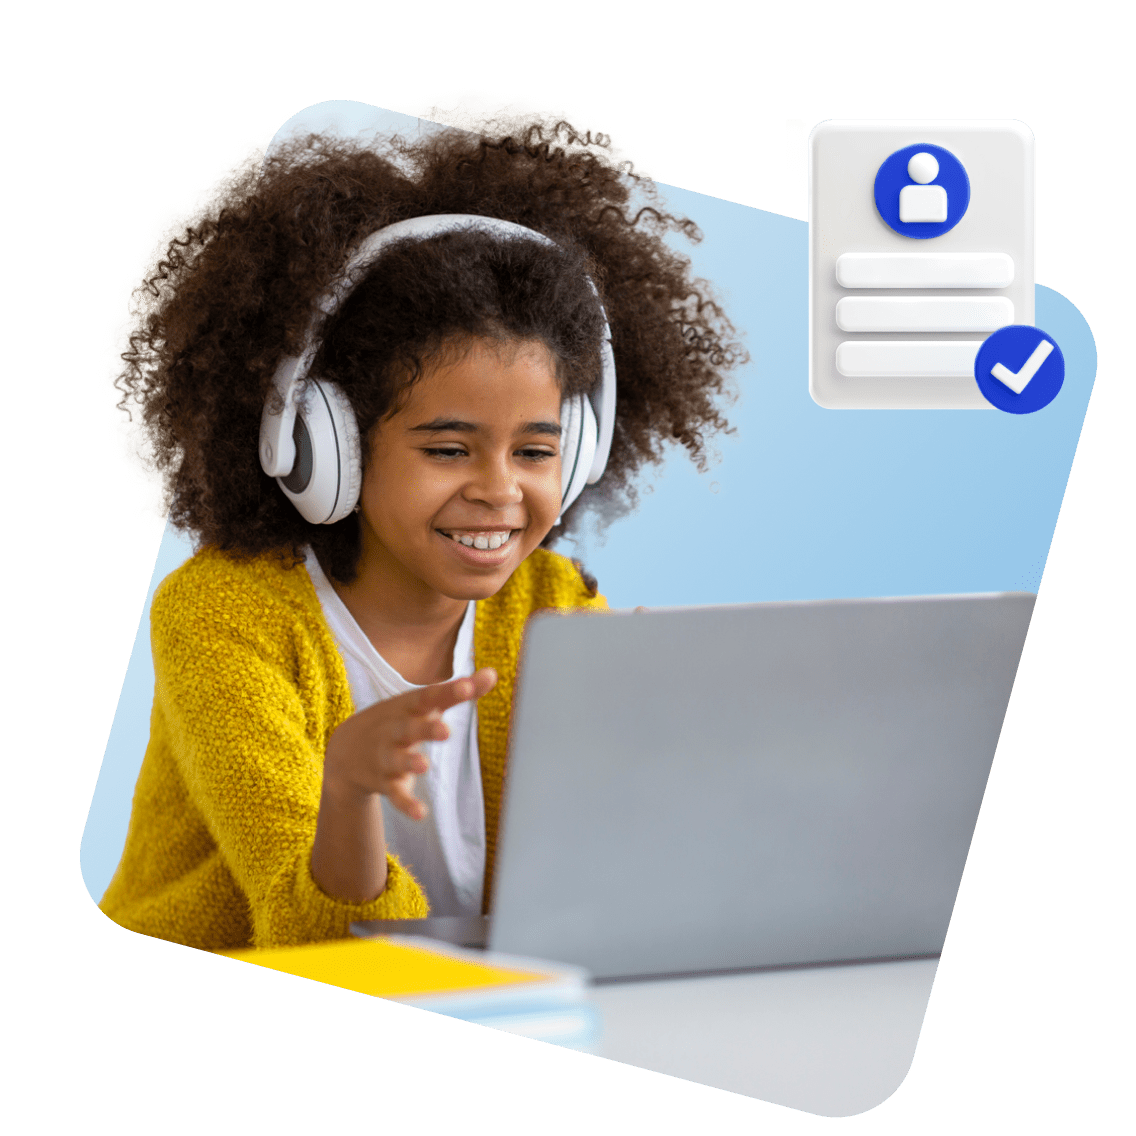 Oklahoma Online Schools image 1 (name 3 Young Girl Laptop Headphones Certificate 1 1)